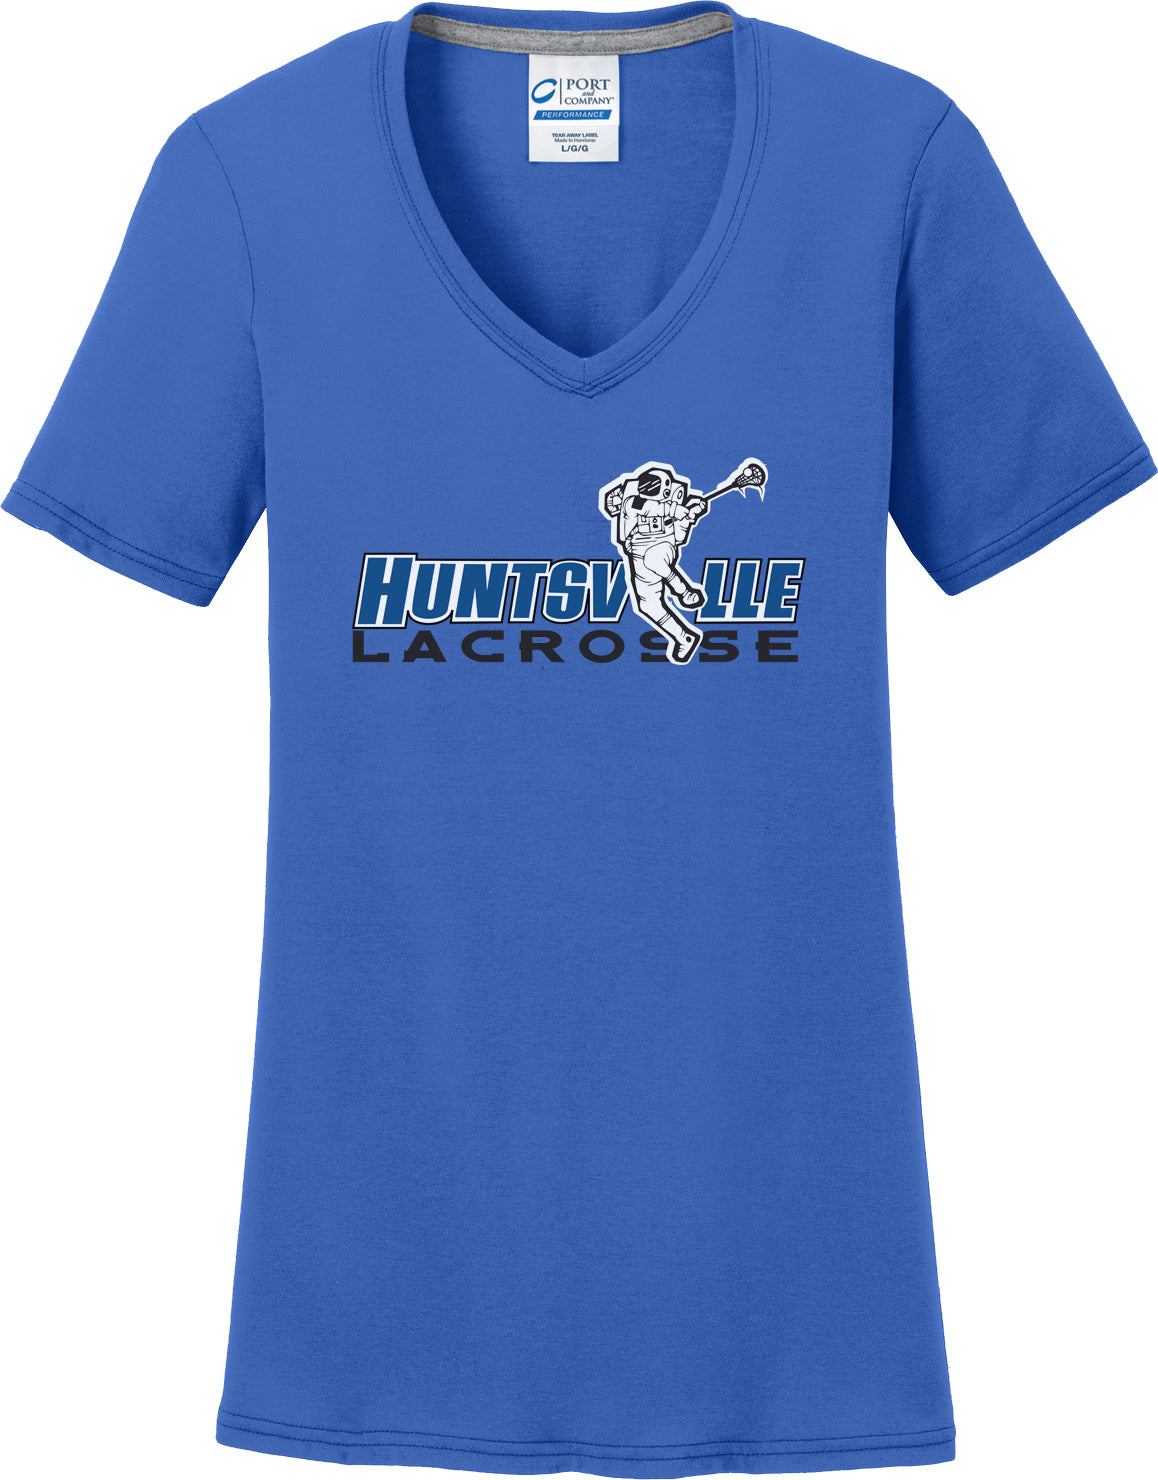 Huntsville Lacrosse Women's Royal T-Shirt